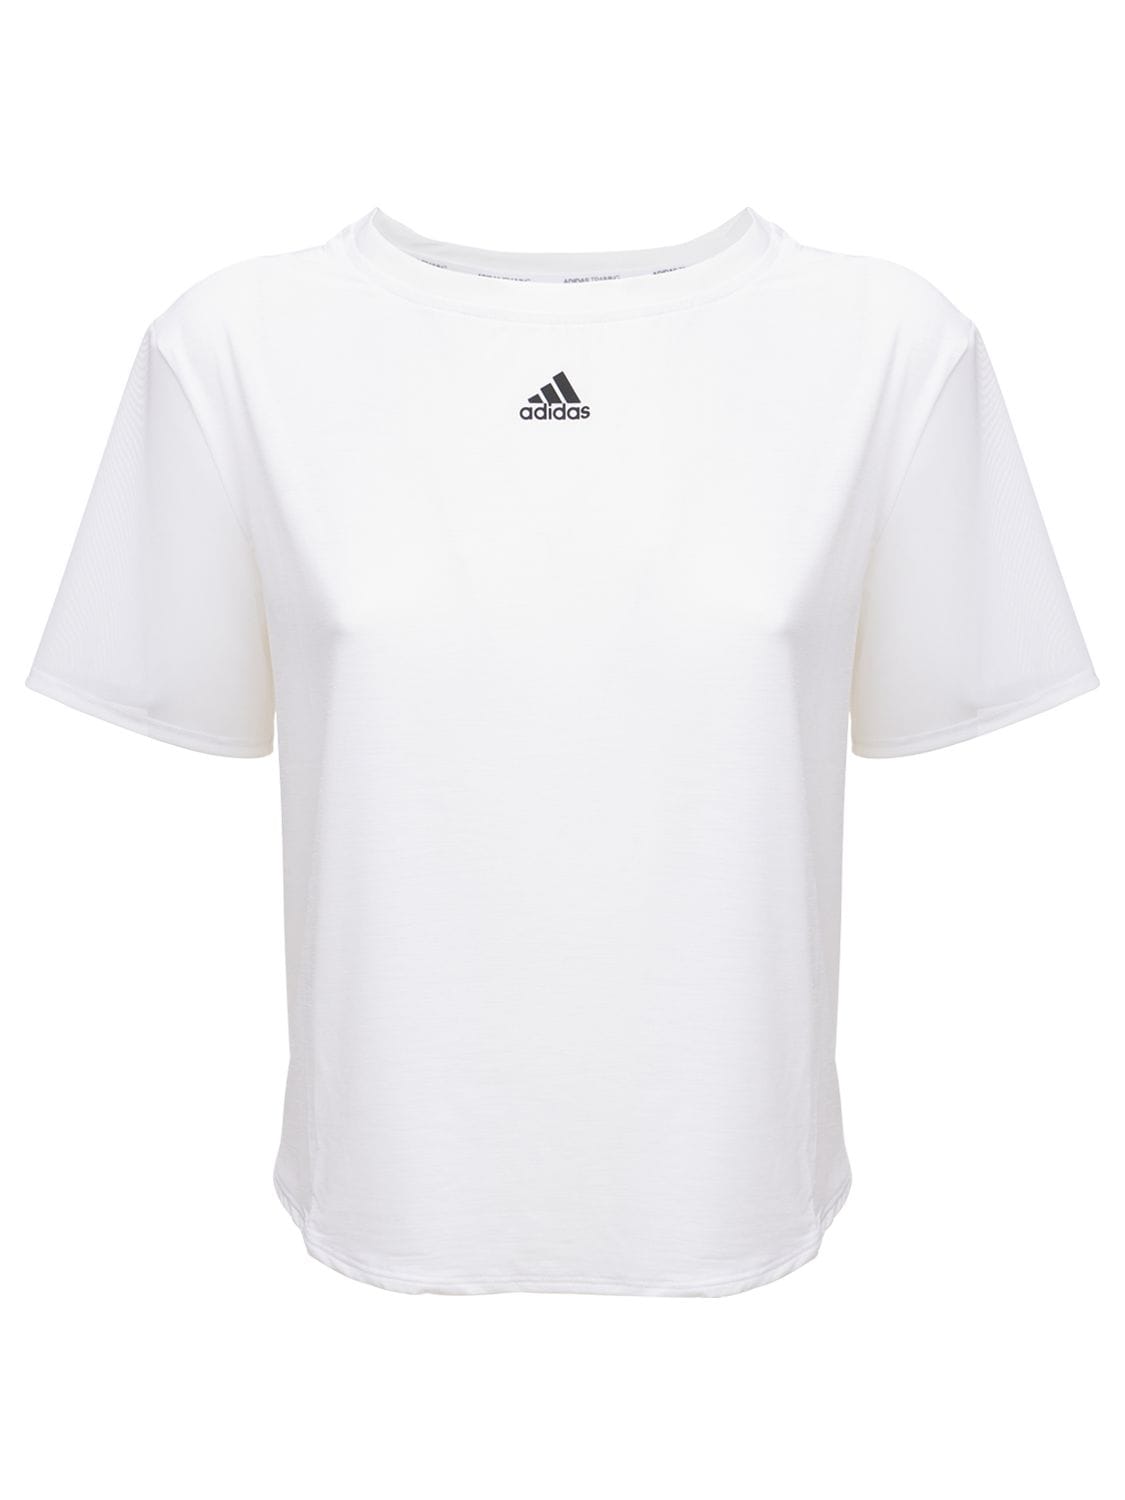 Adidas Originals Dance T-shirt In White